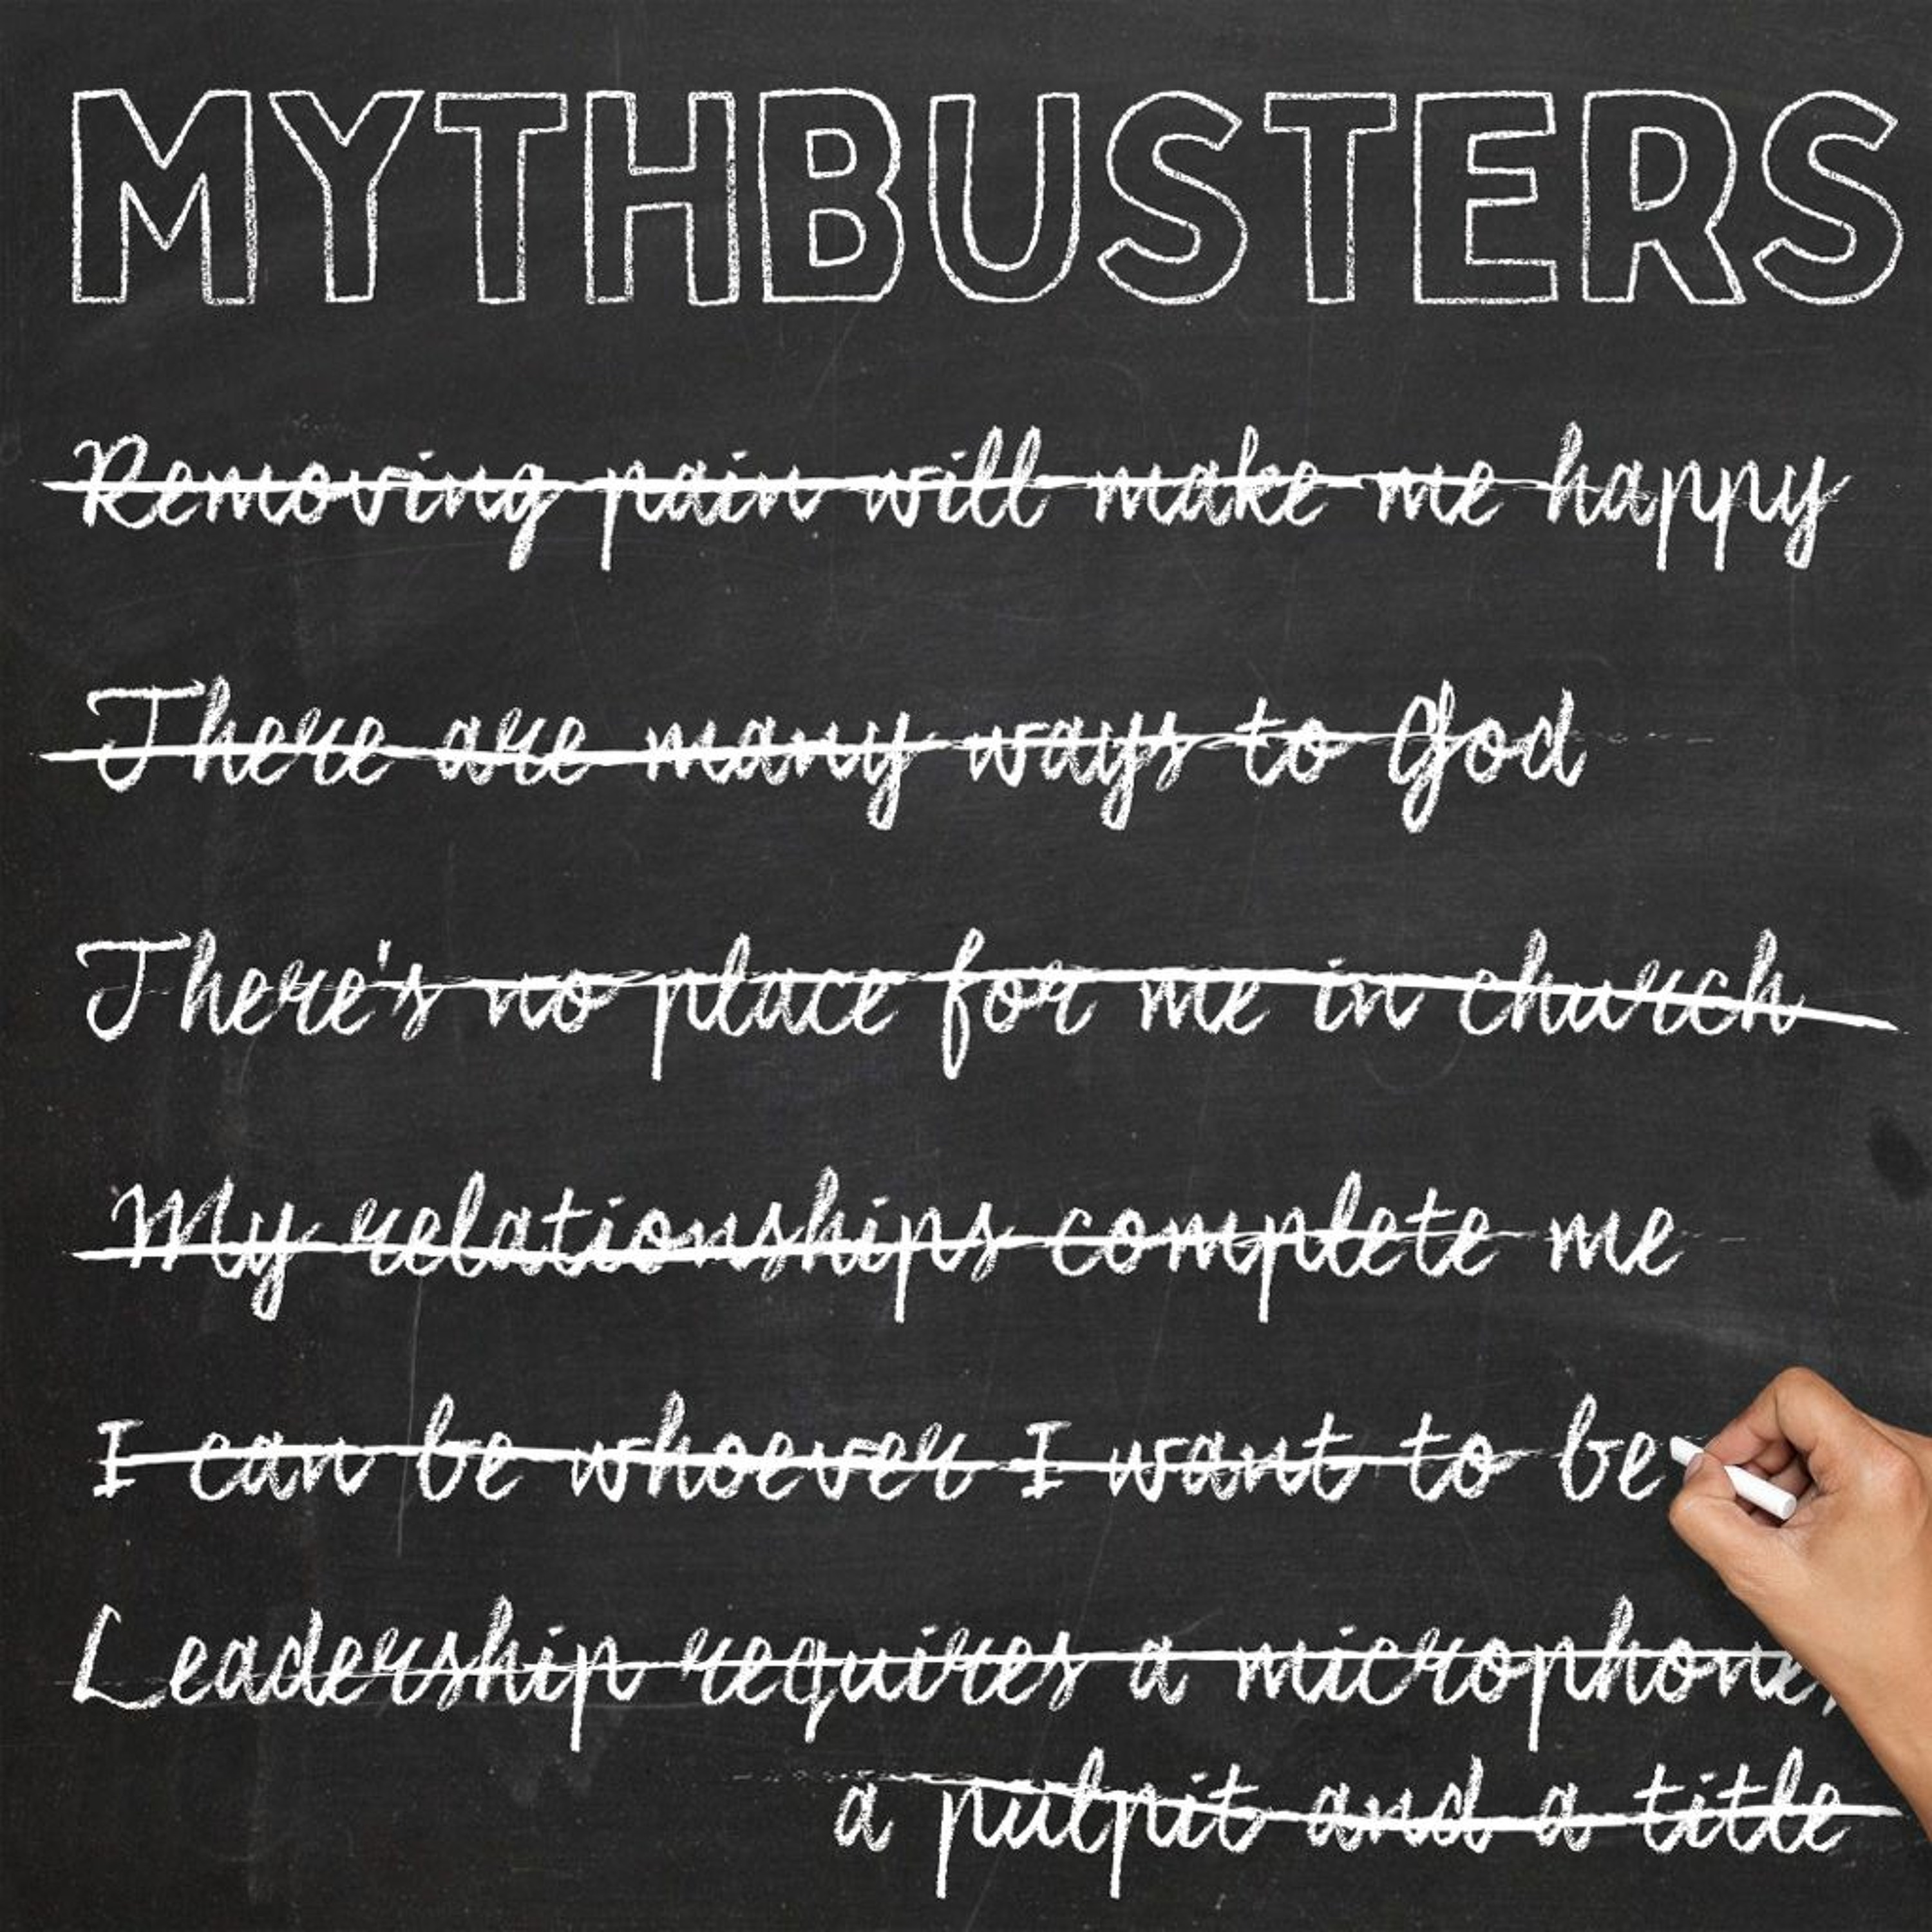 Mythbusters 7 Myths about Lordship - John Harding - 2020.03.01